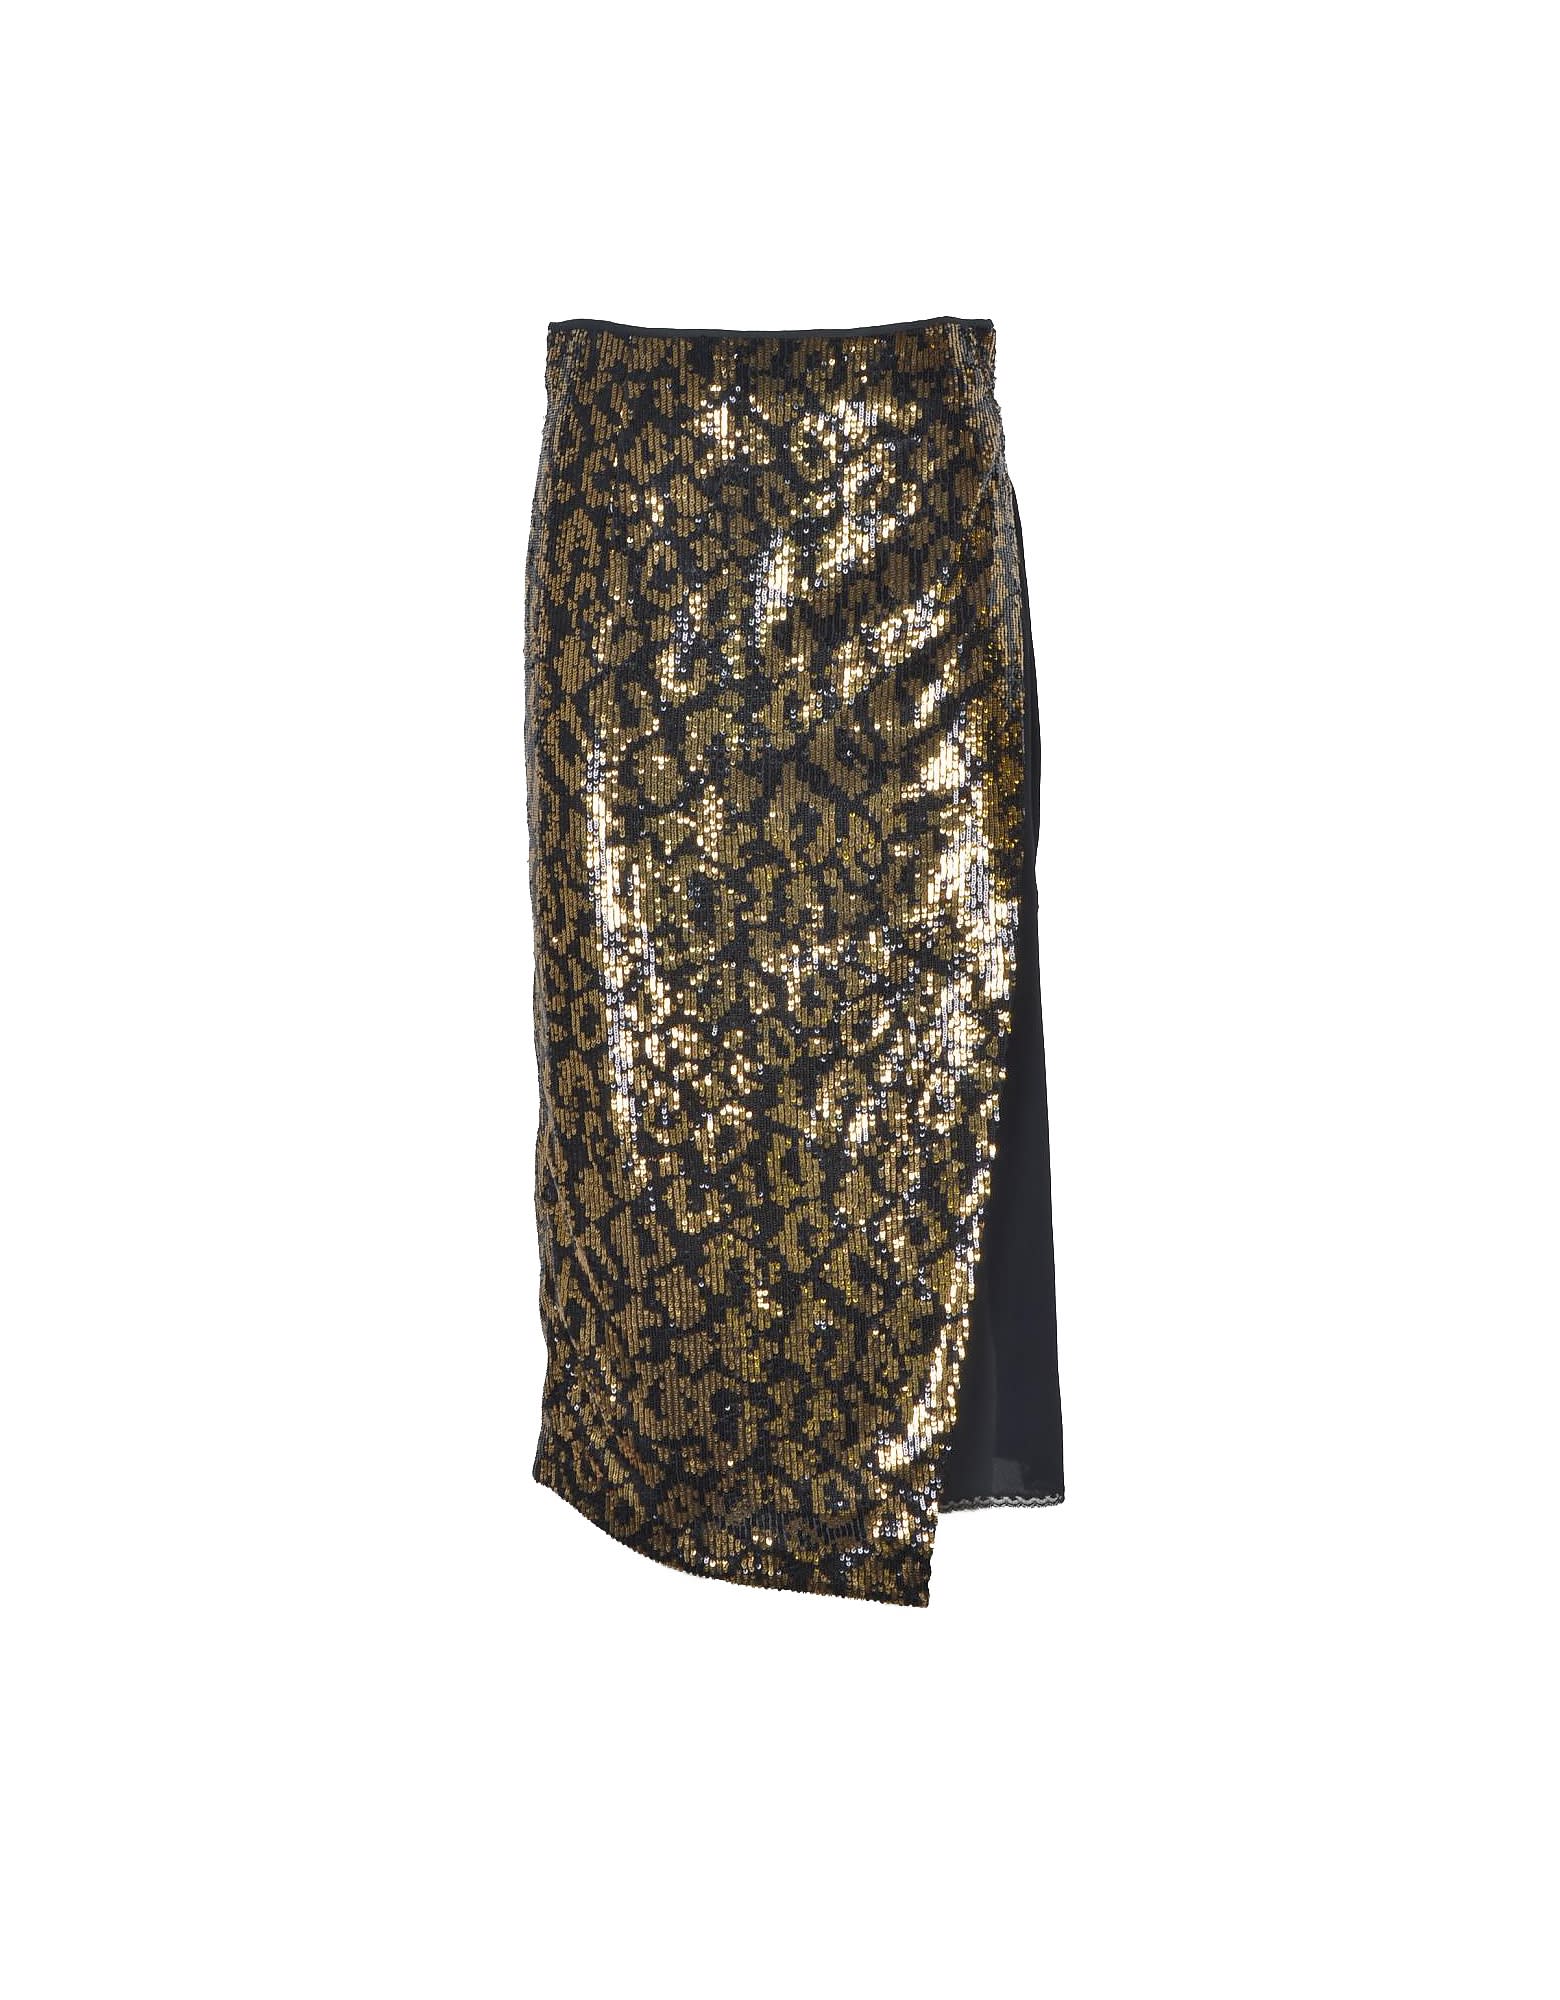 N.21 N°21 Womens Black / Gold Skirt